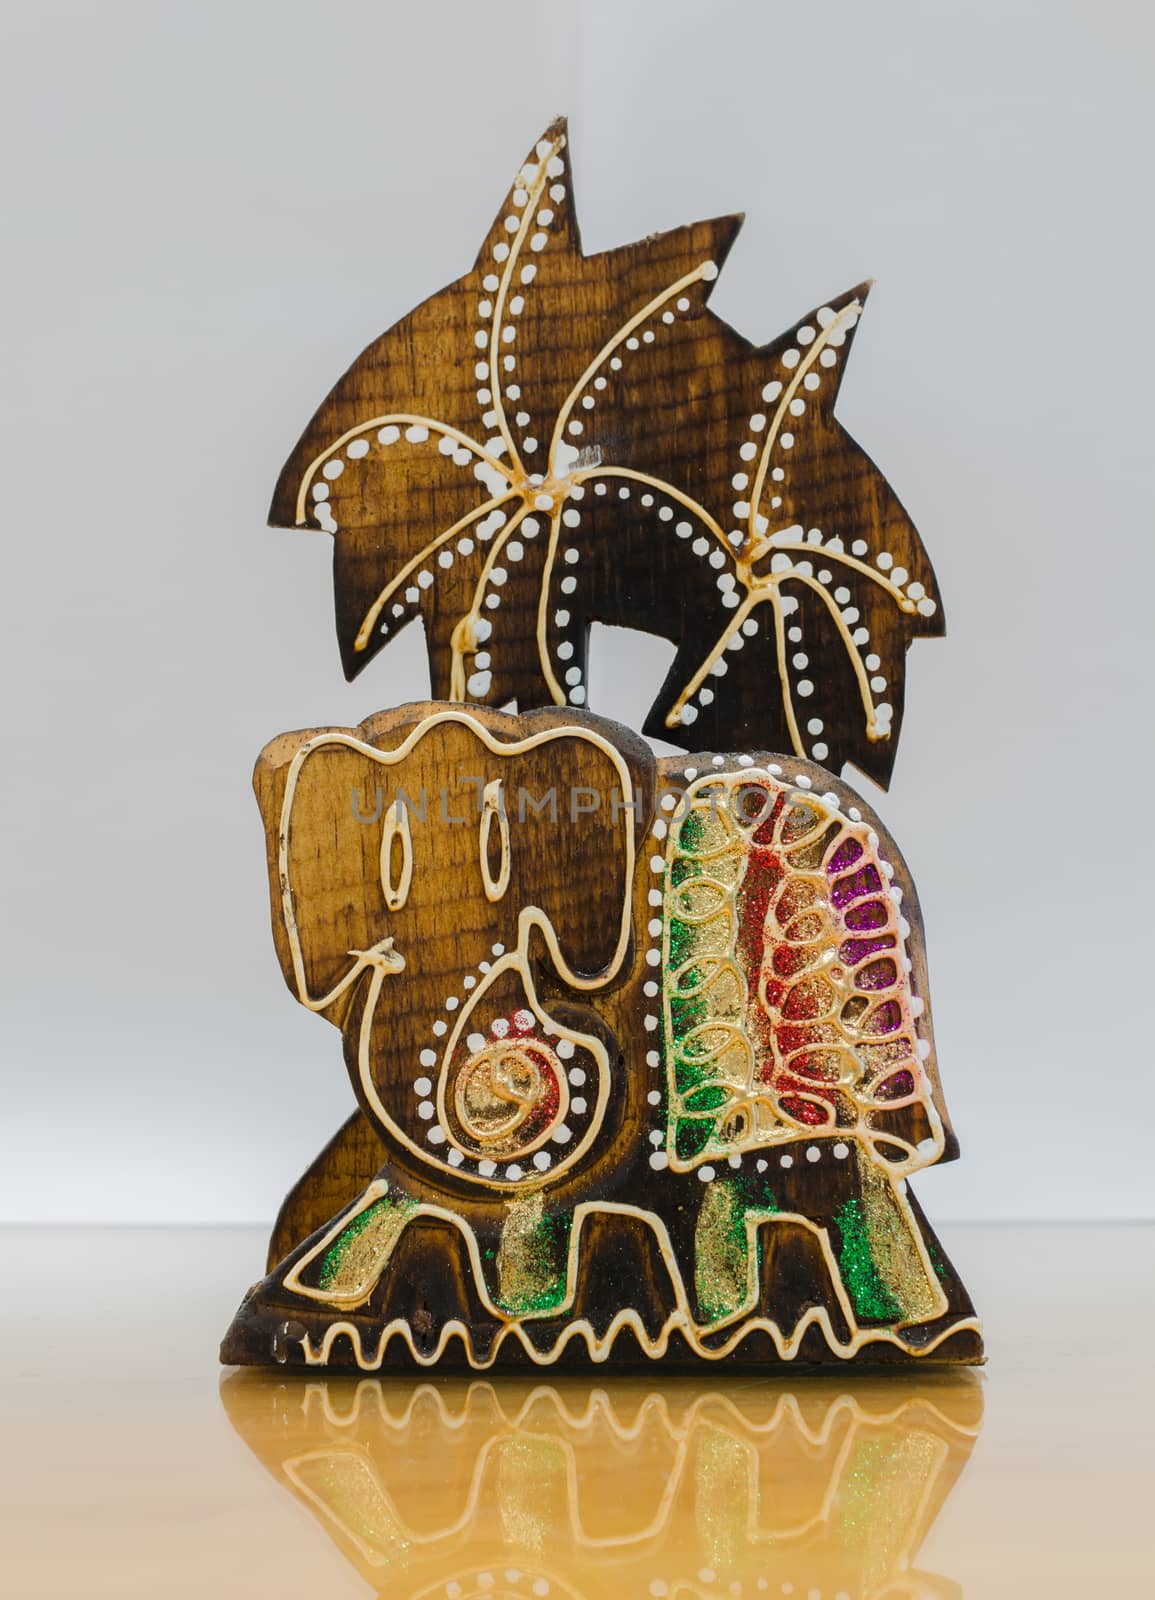 Handicraft Elephant,Souvenir from Bali,Indonesia. by nop16